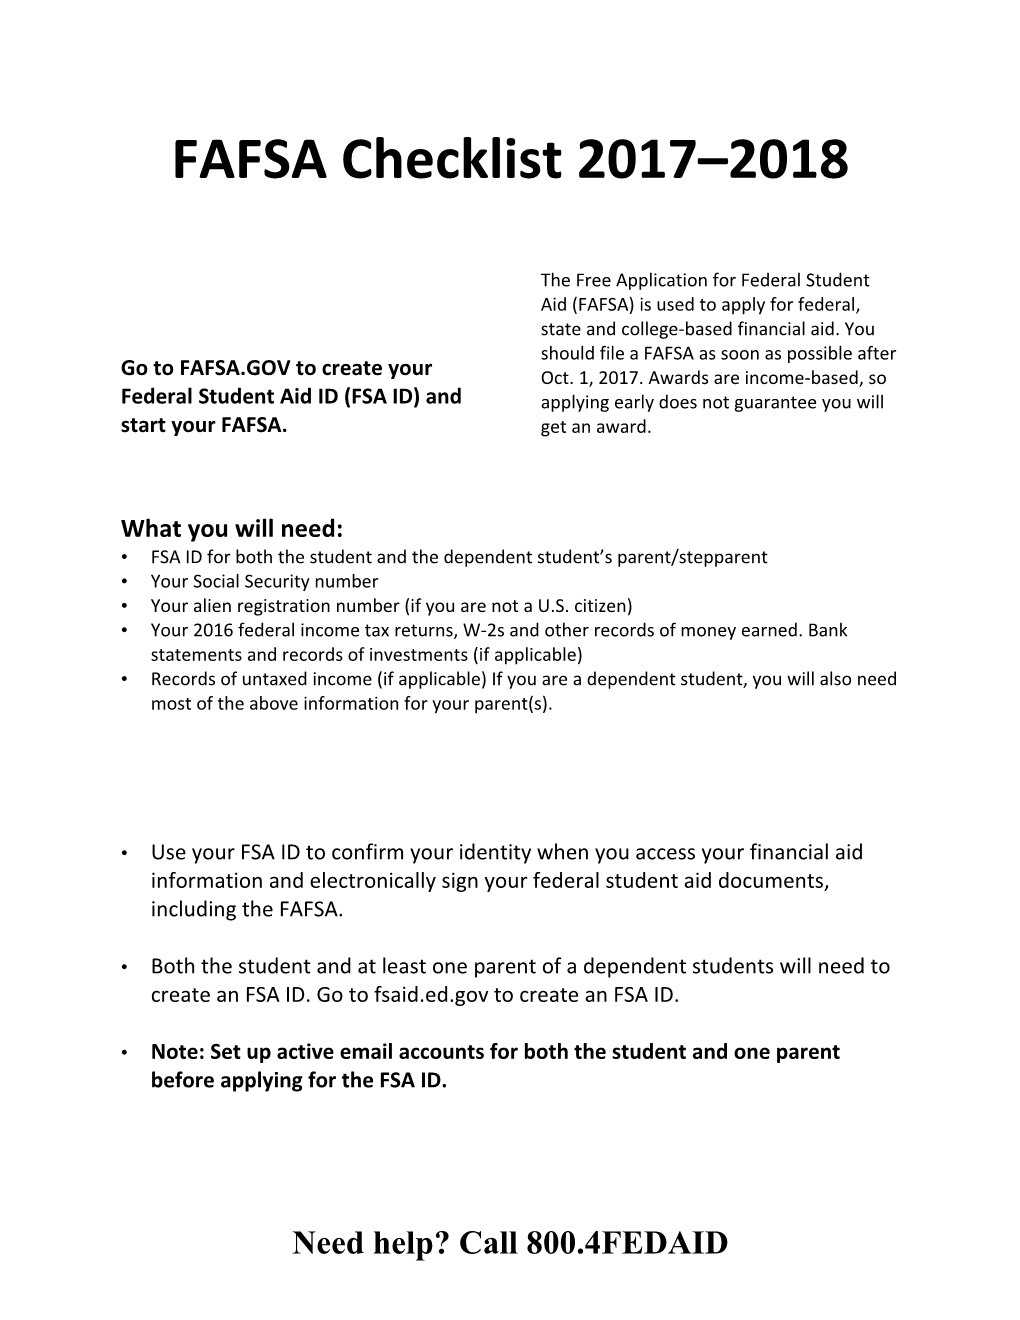 FAFSA Checklist 2017 2018